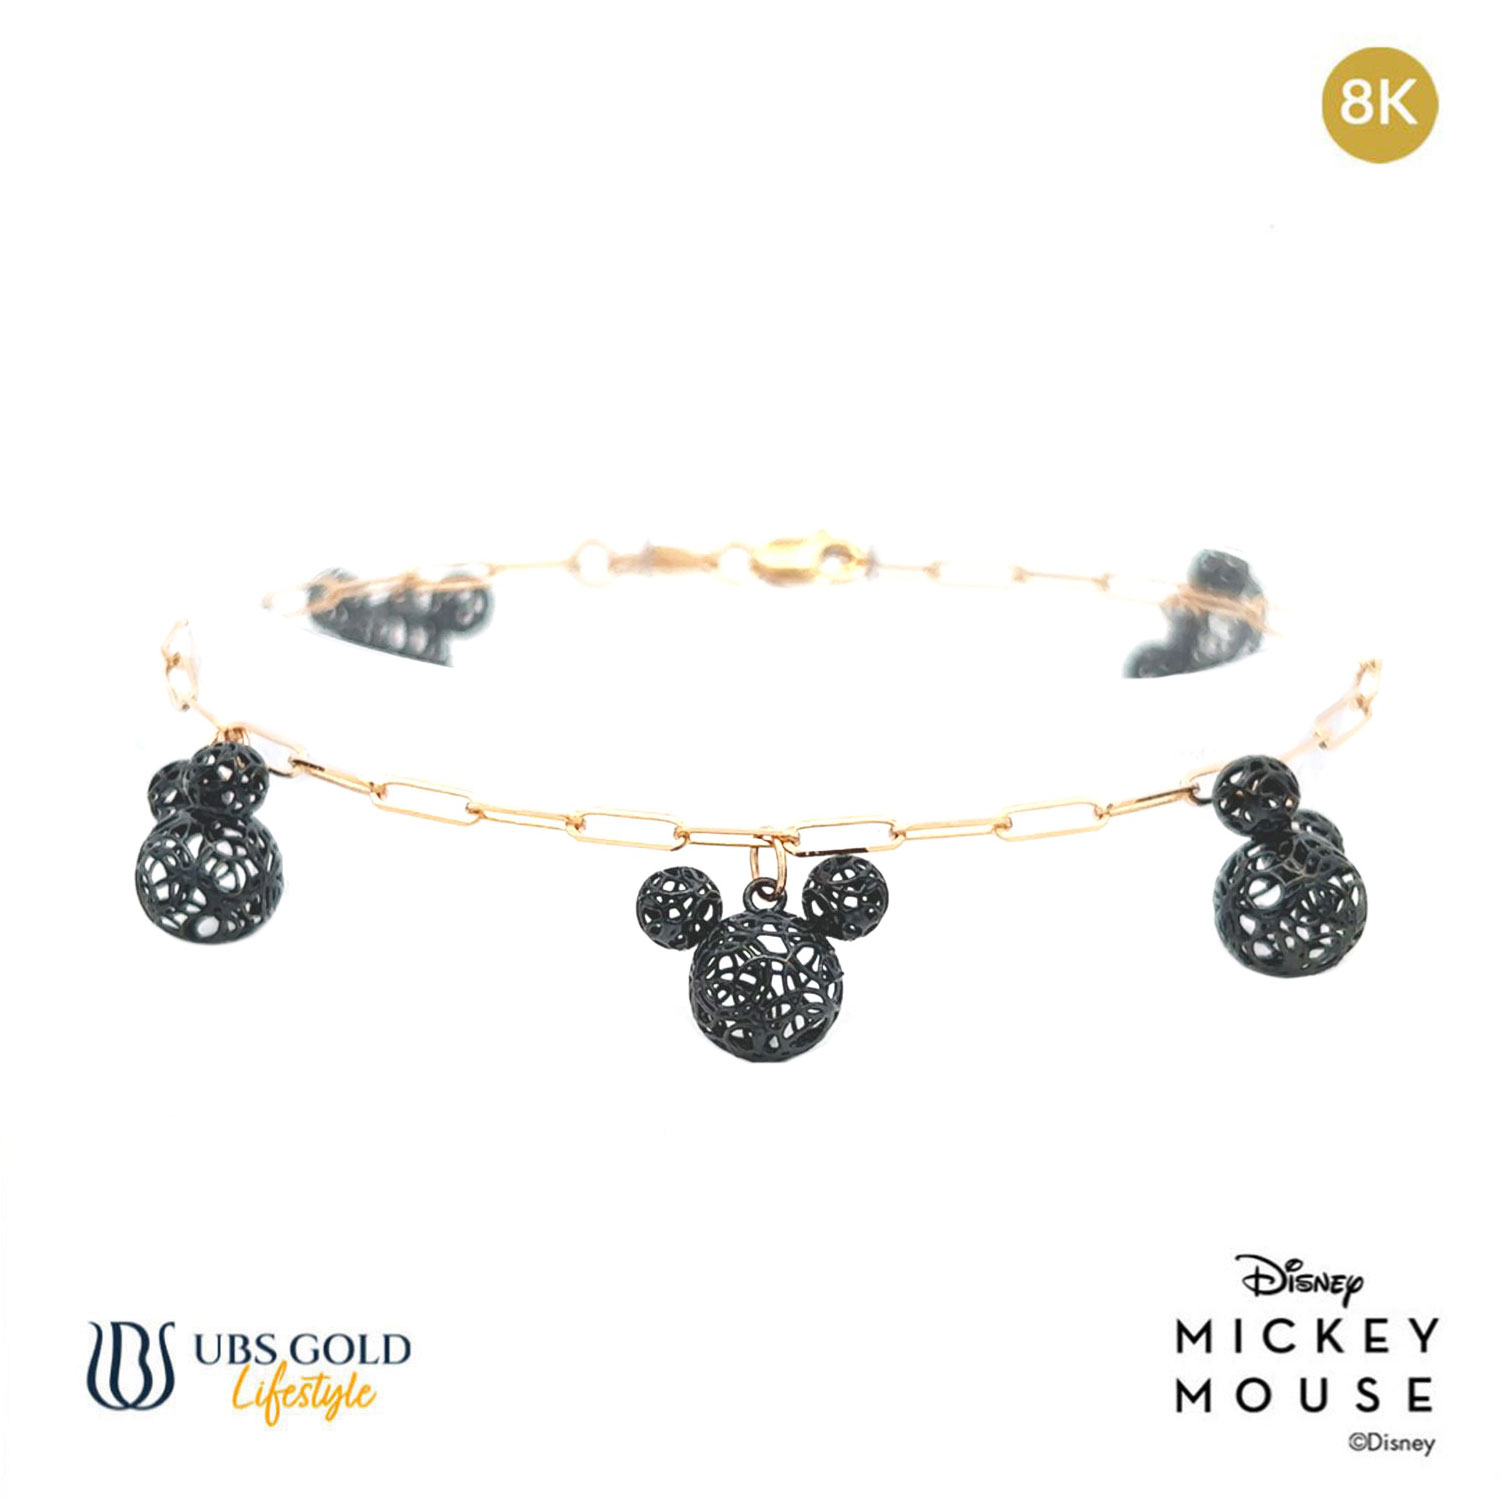 UBS Gold Gelang Emas Disney Mickey Mouse - Kgy0110K - 8K